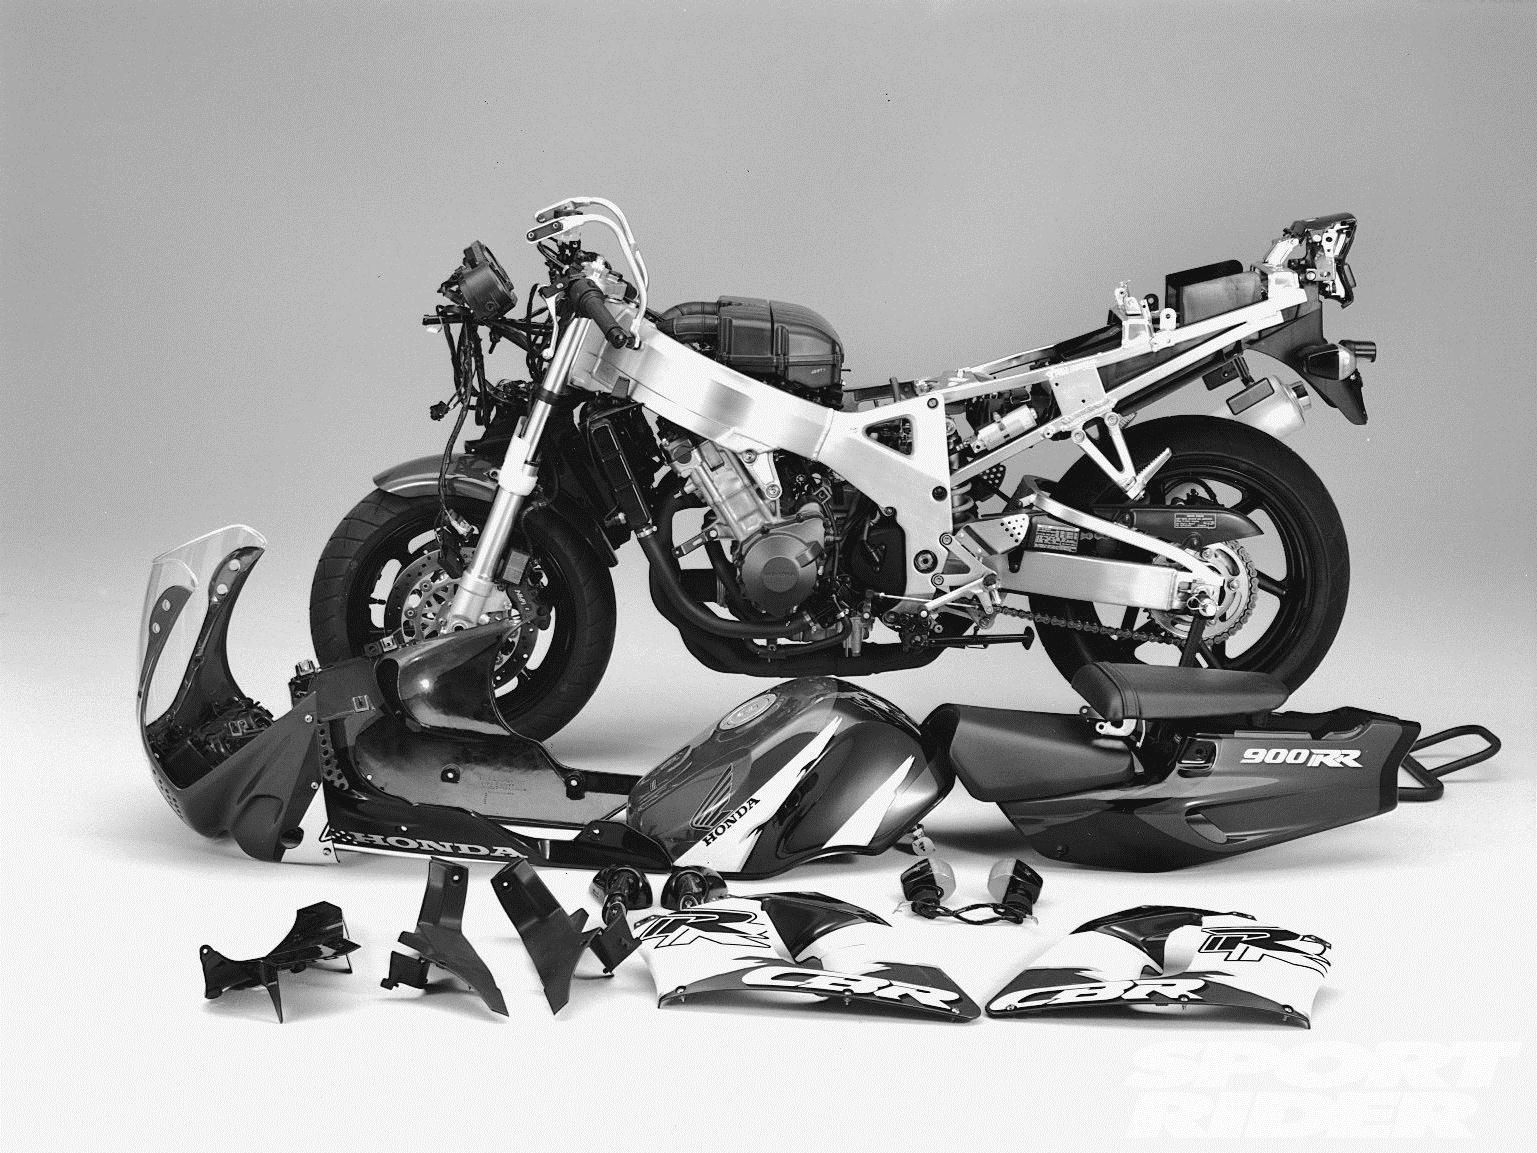 Honda CBR900 Fireblade Screen Pins Bolts Sc28 1993 1994